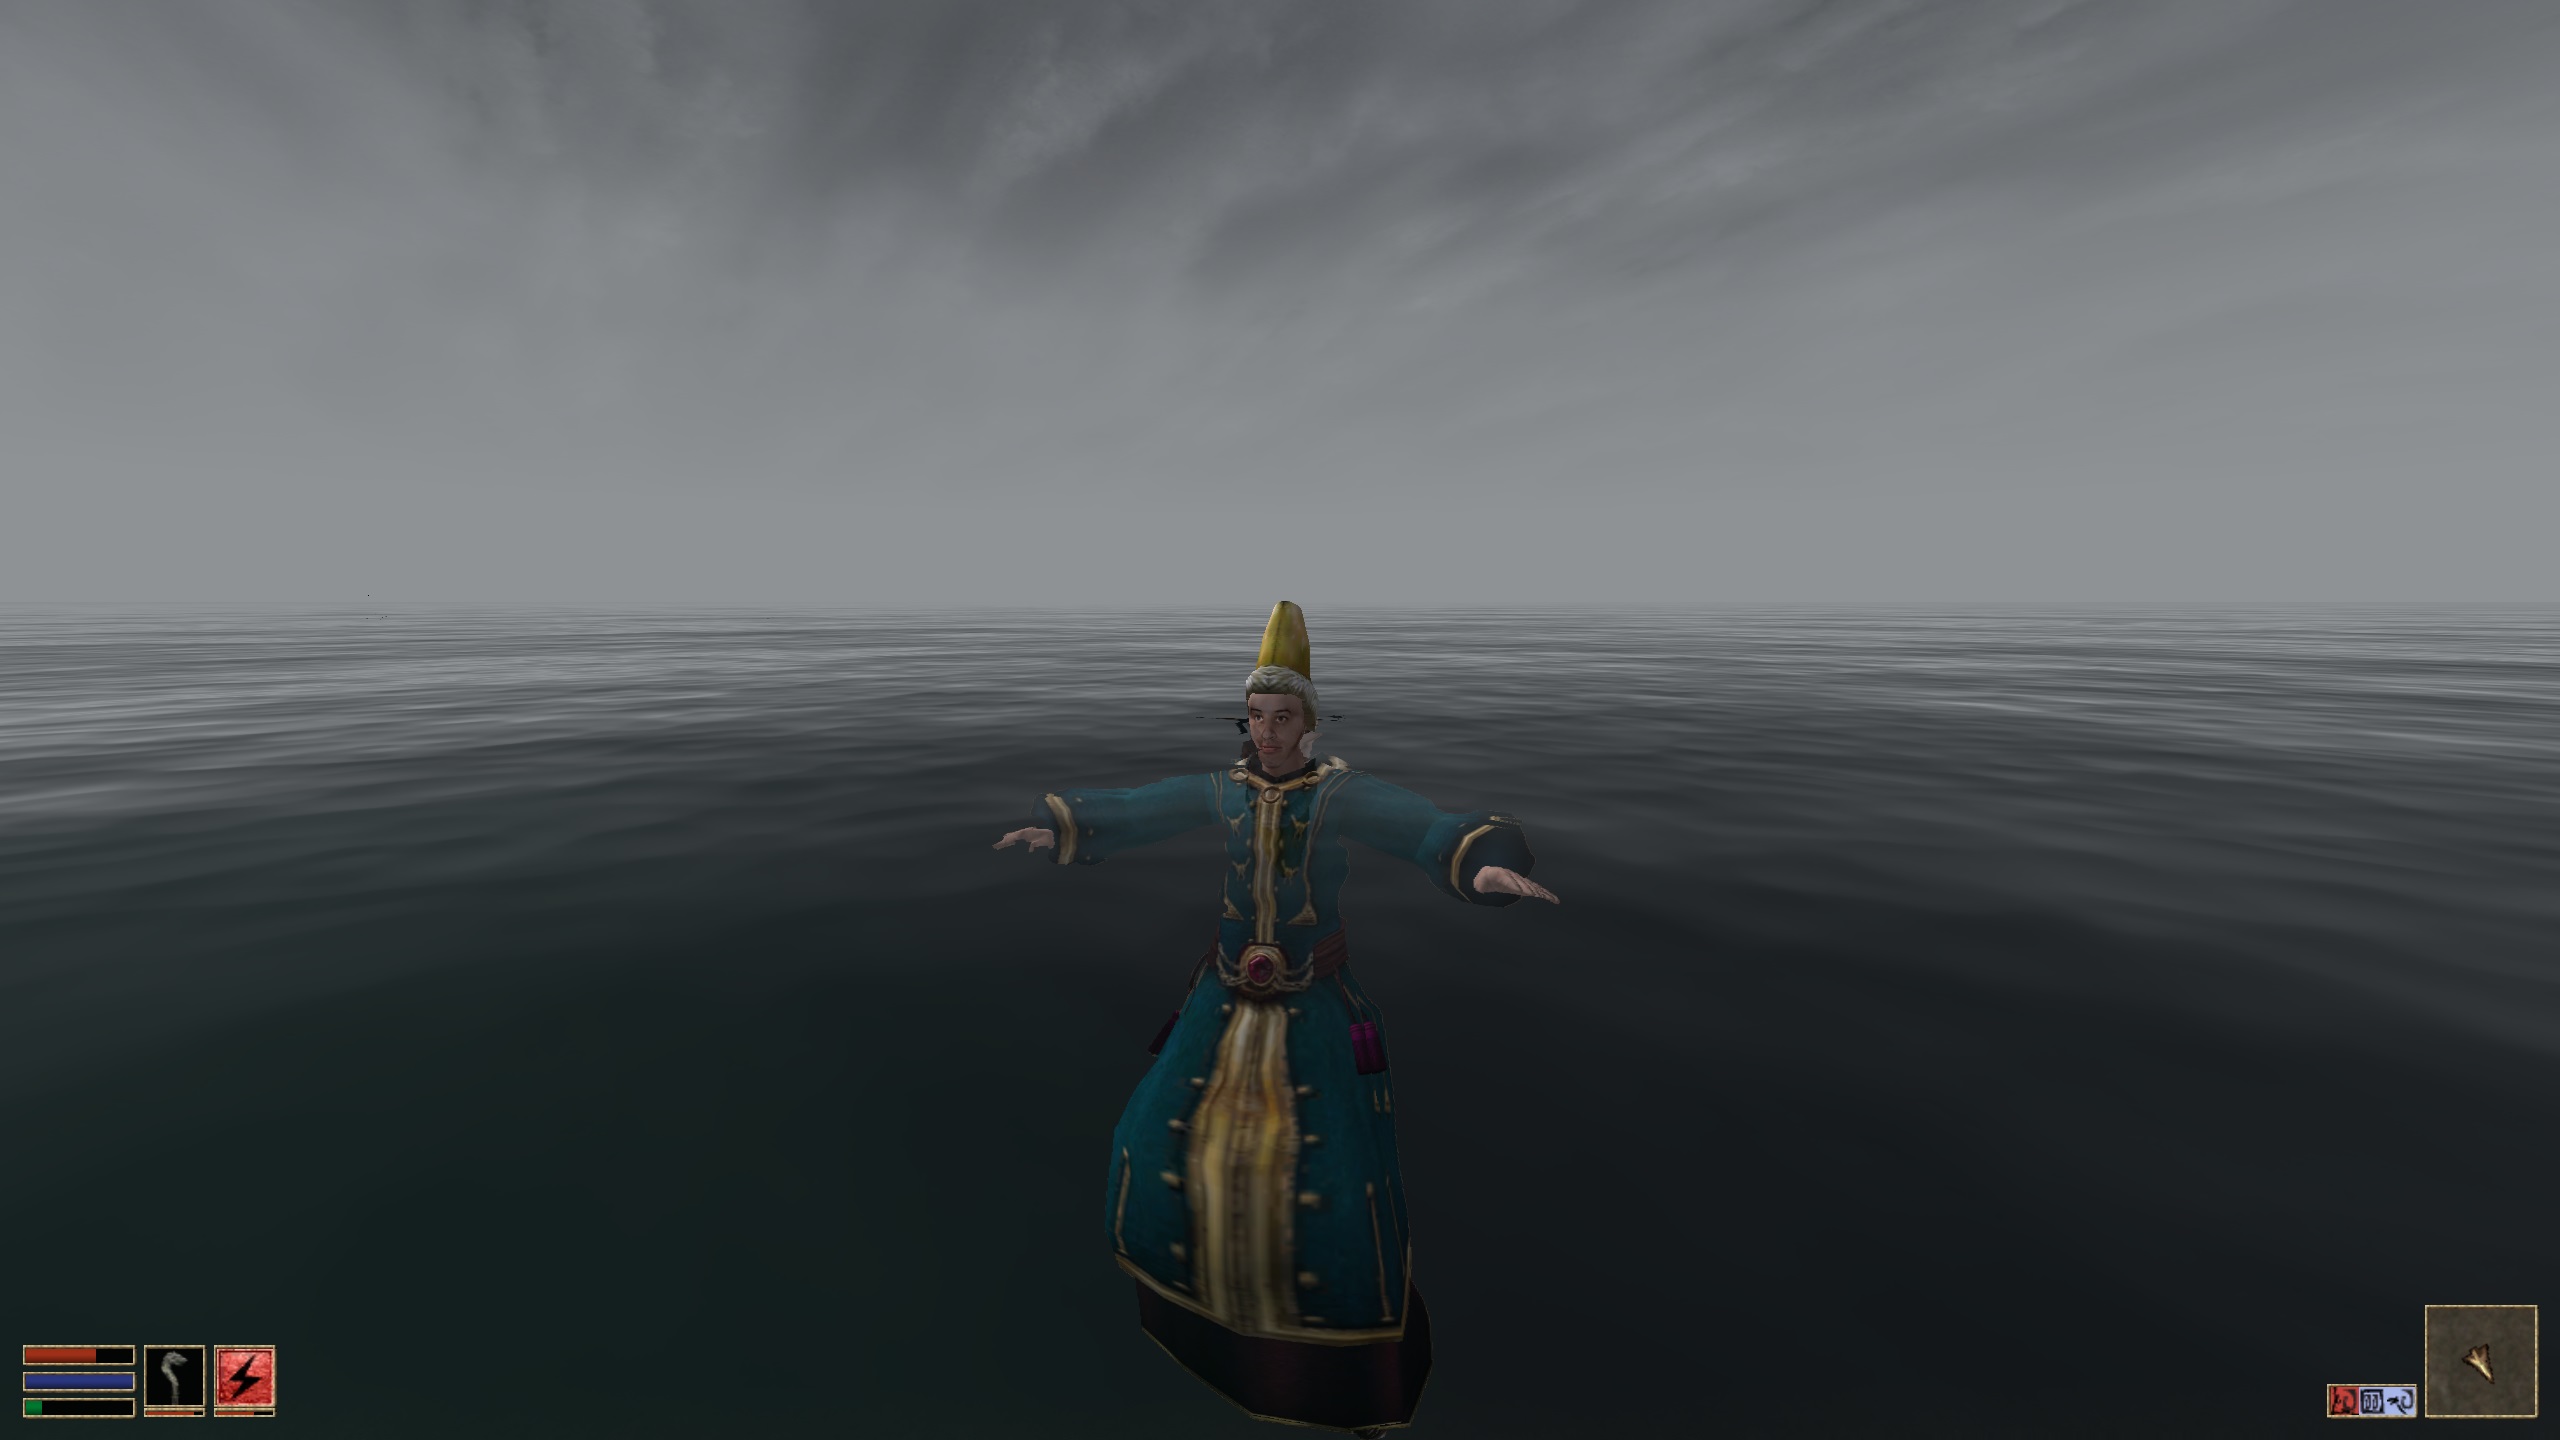 Breton in silly hat swimming in vast ocean